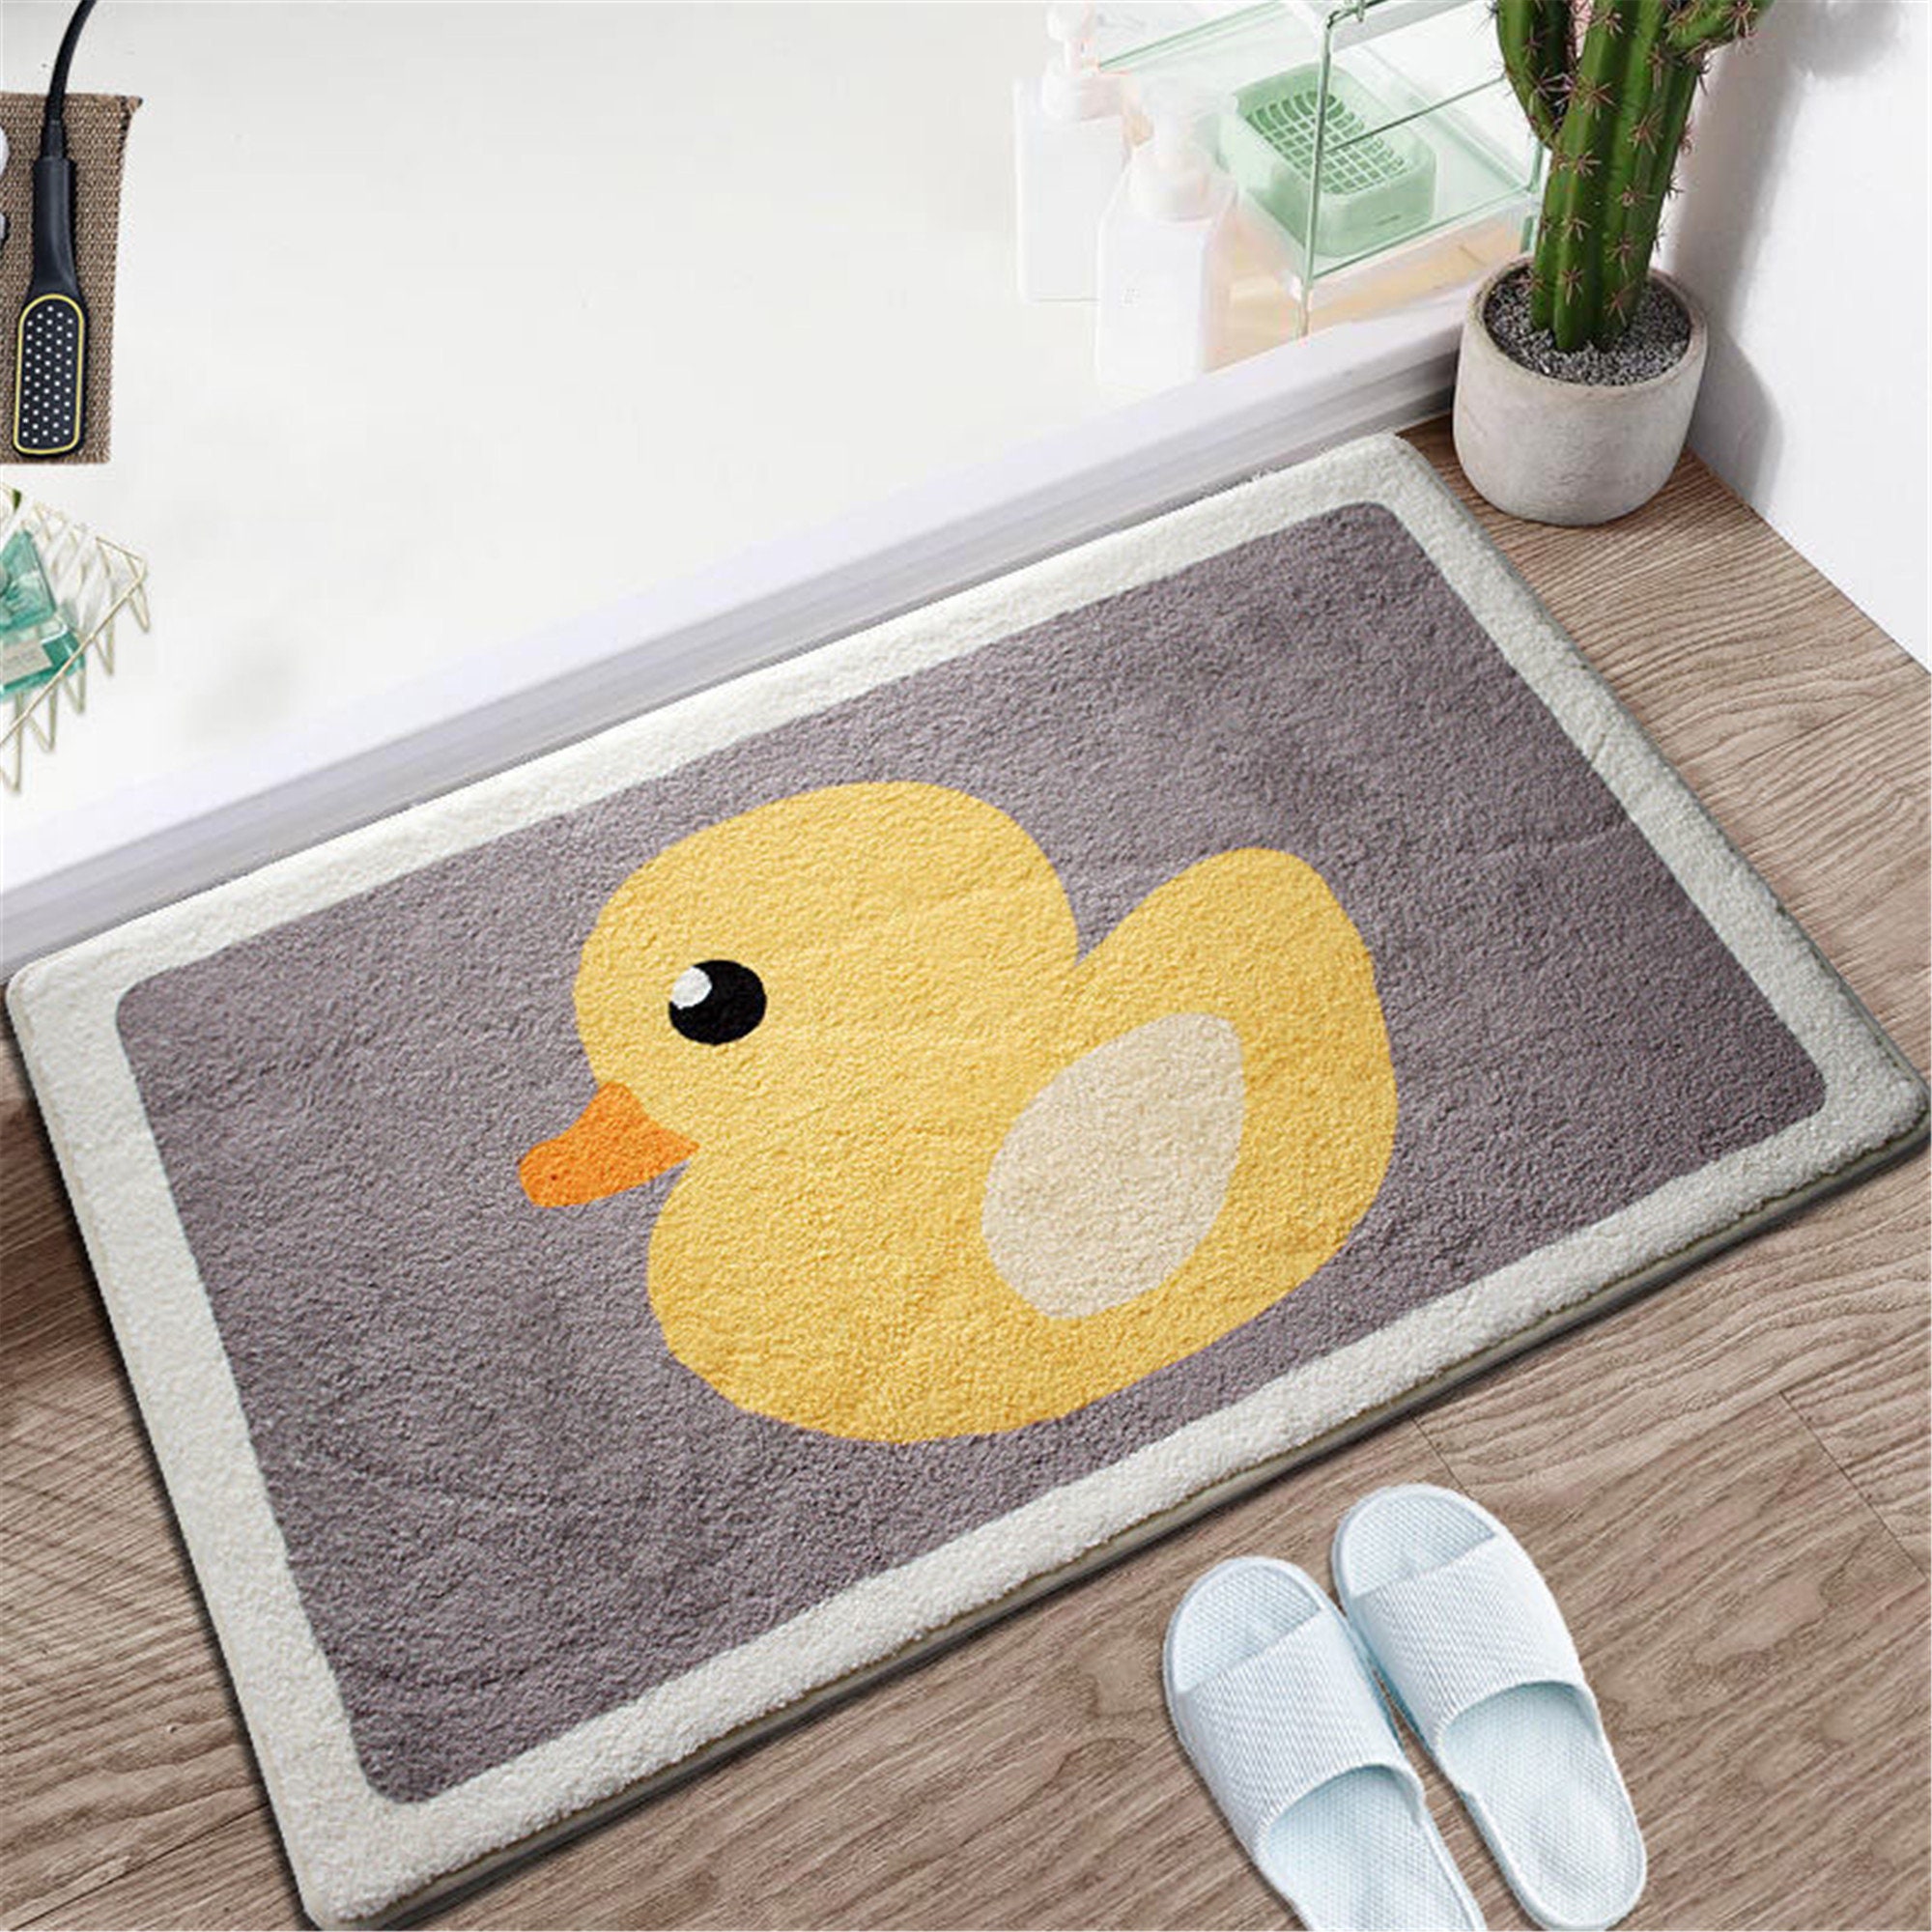 Bathroom Absorbent Carpet Anime Carpet Pure Color Bathroom | Etsy